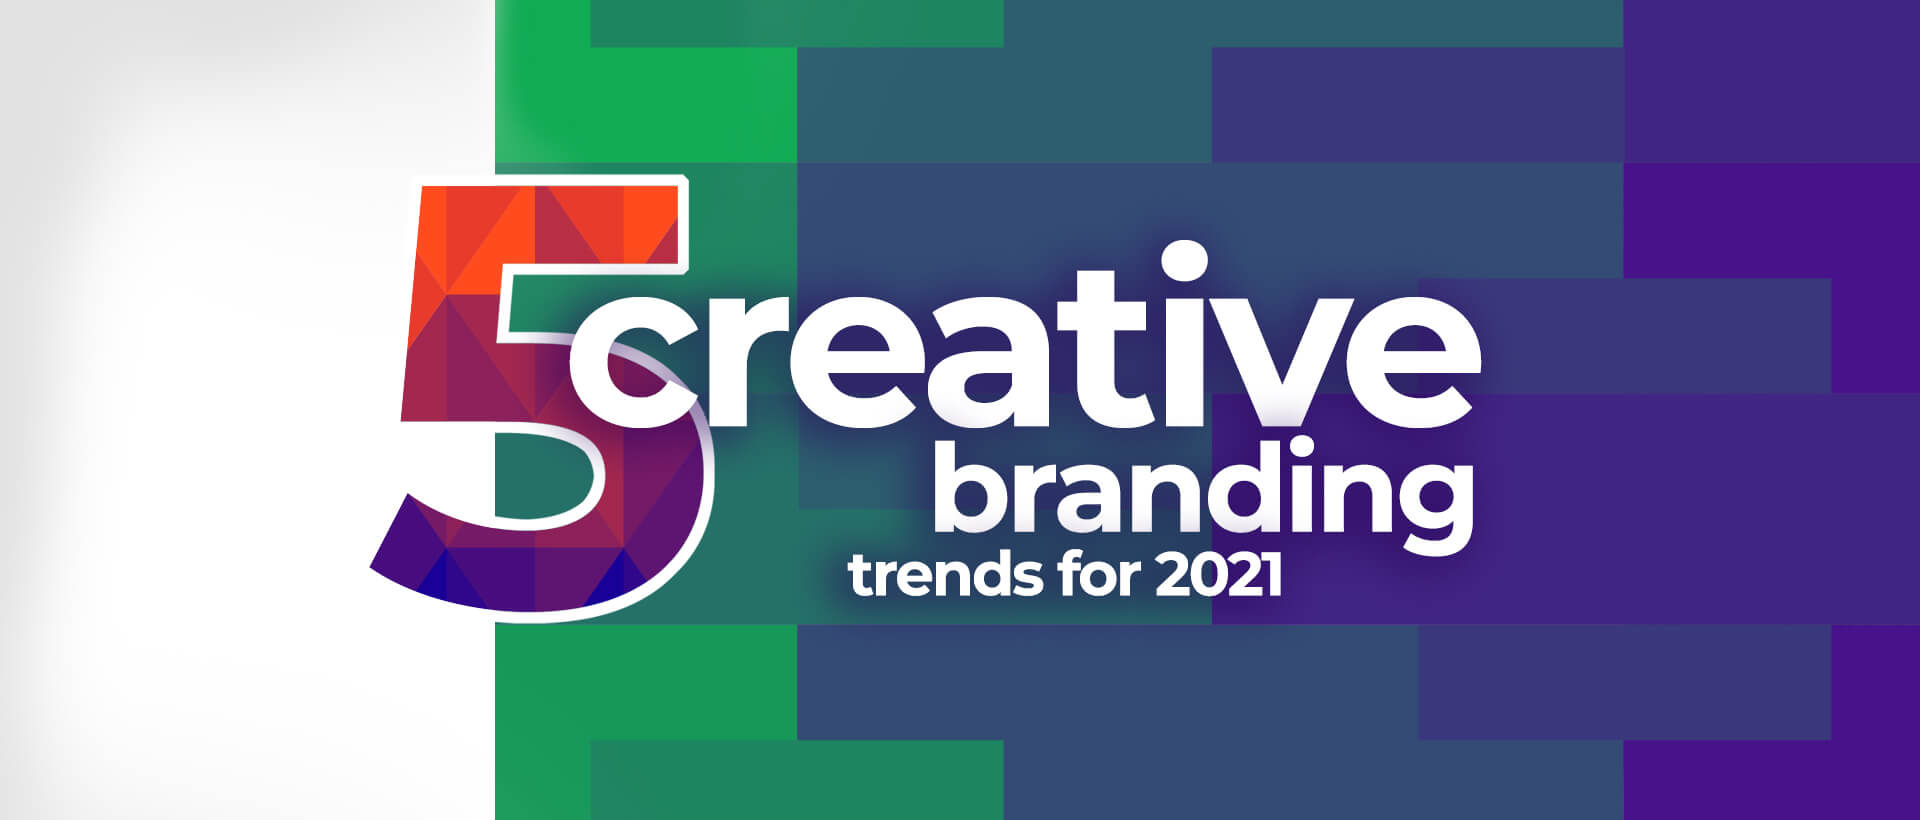 5 creative branding trends for 2021